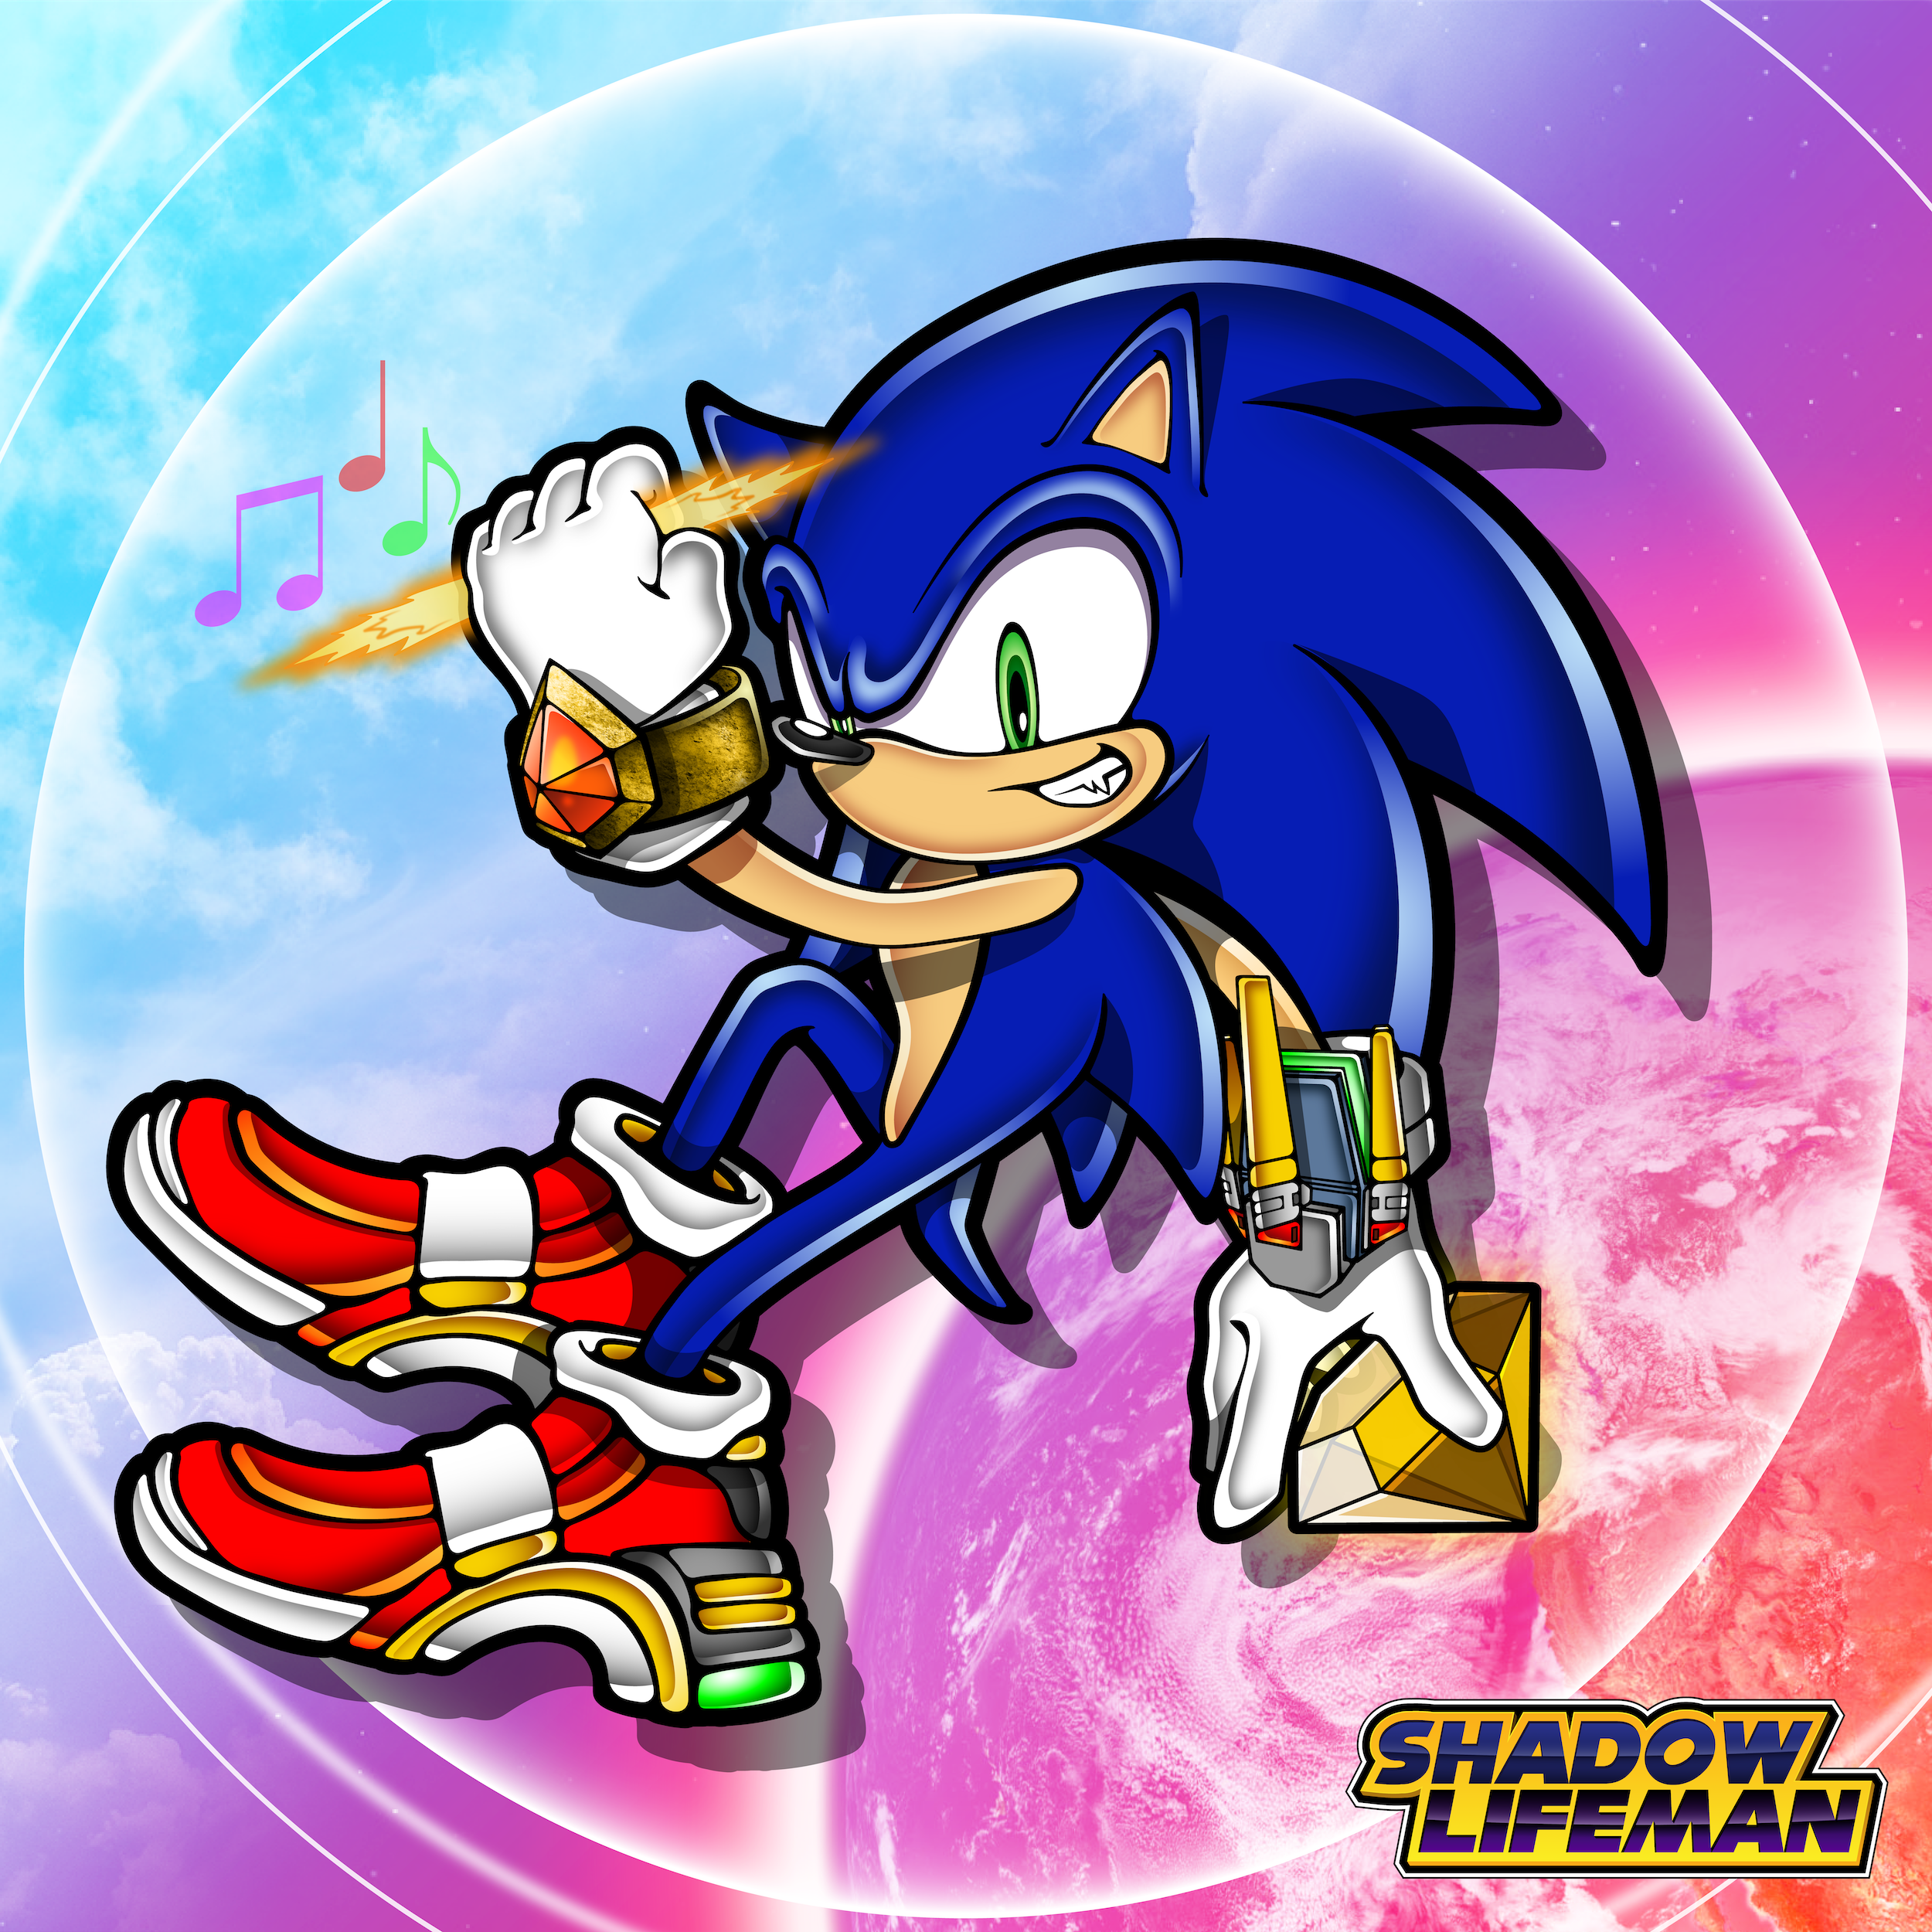 Sonic and Shadow - Sonic Adventure 2 by ShadowLifeman on DeviantArt